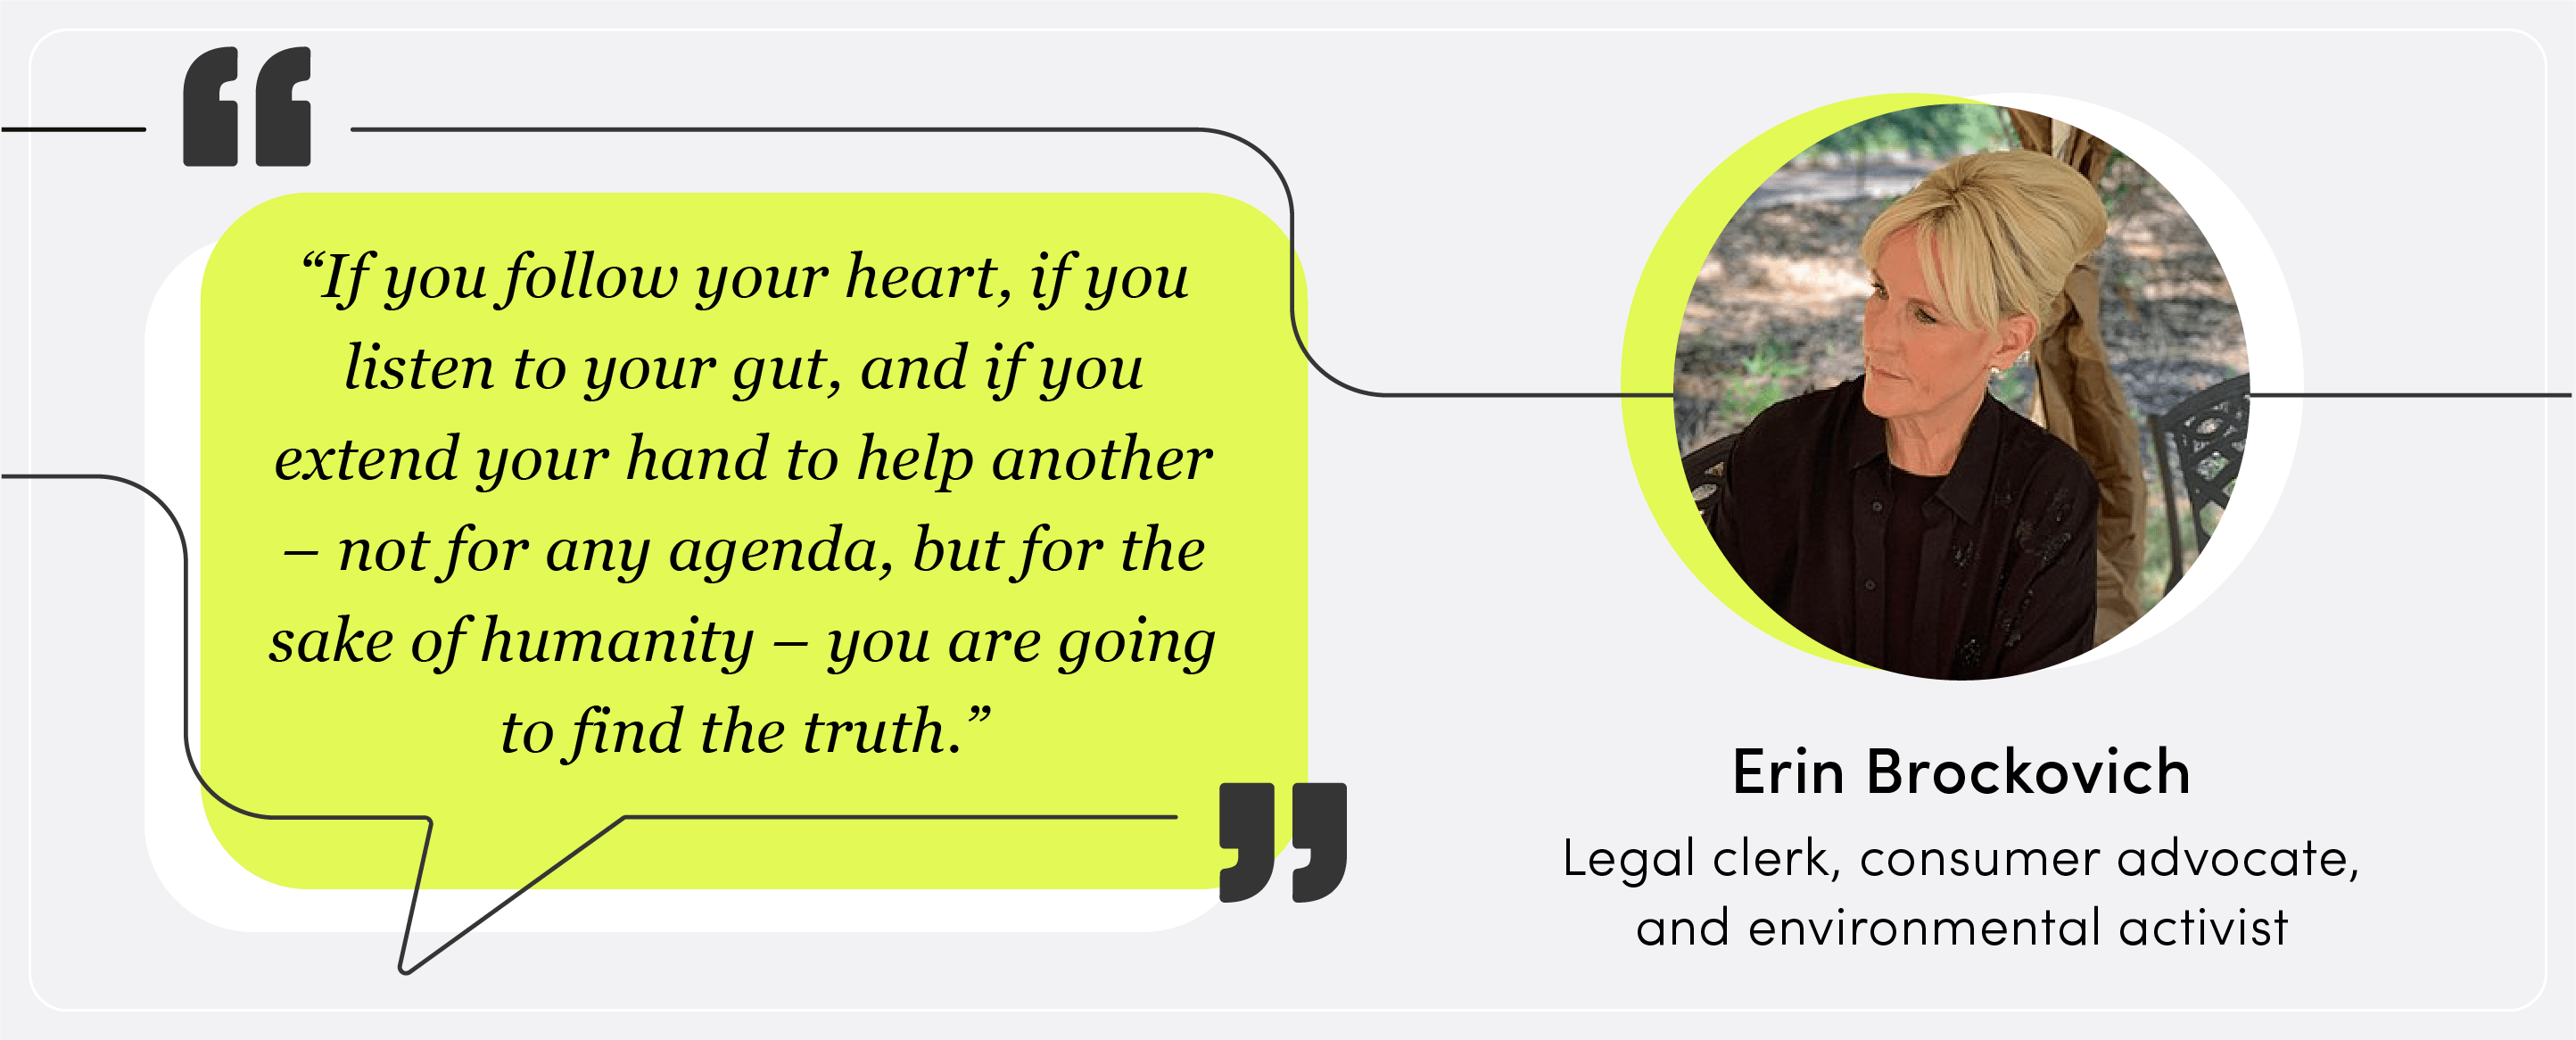 Erin Brockovich quote